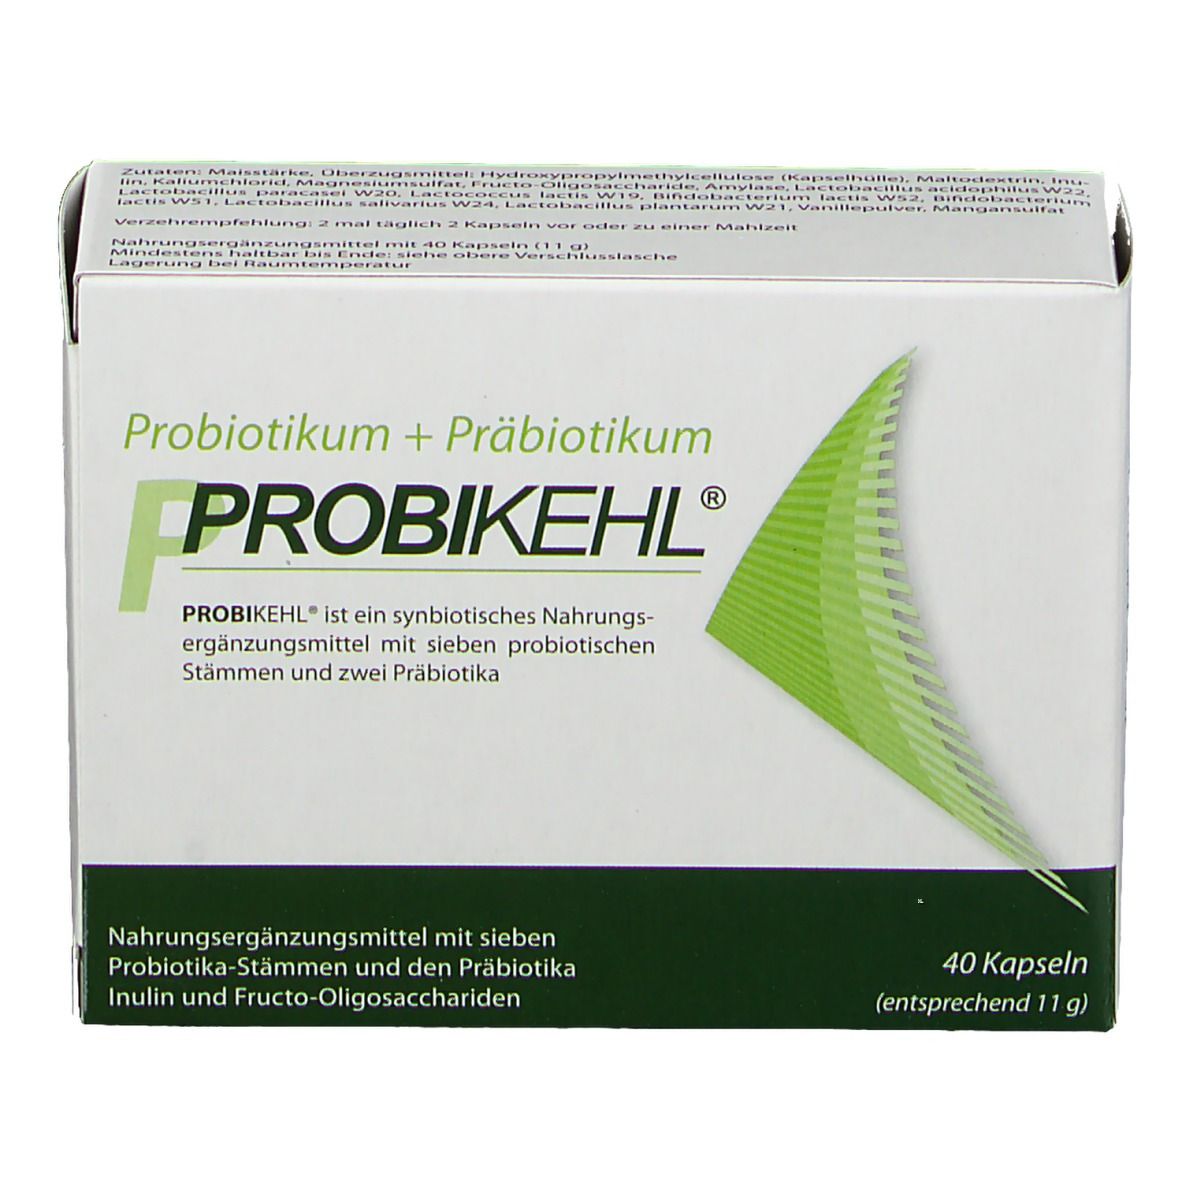 Probikehl®